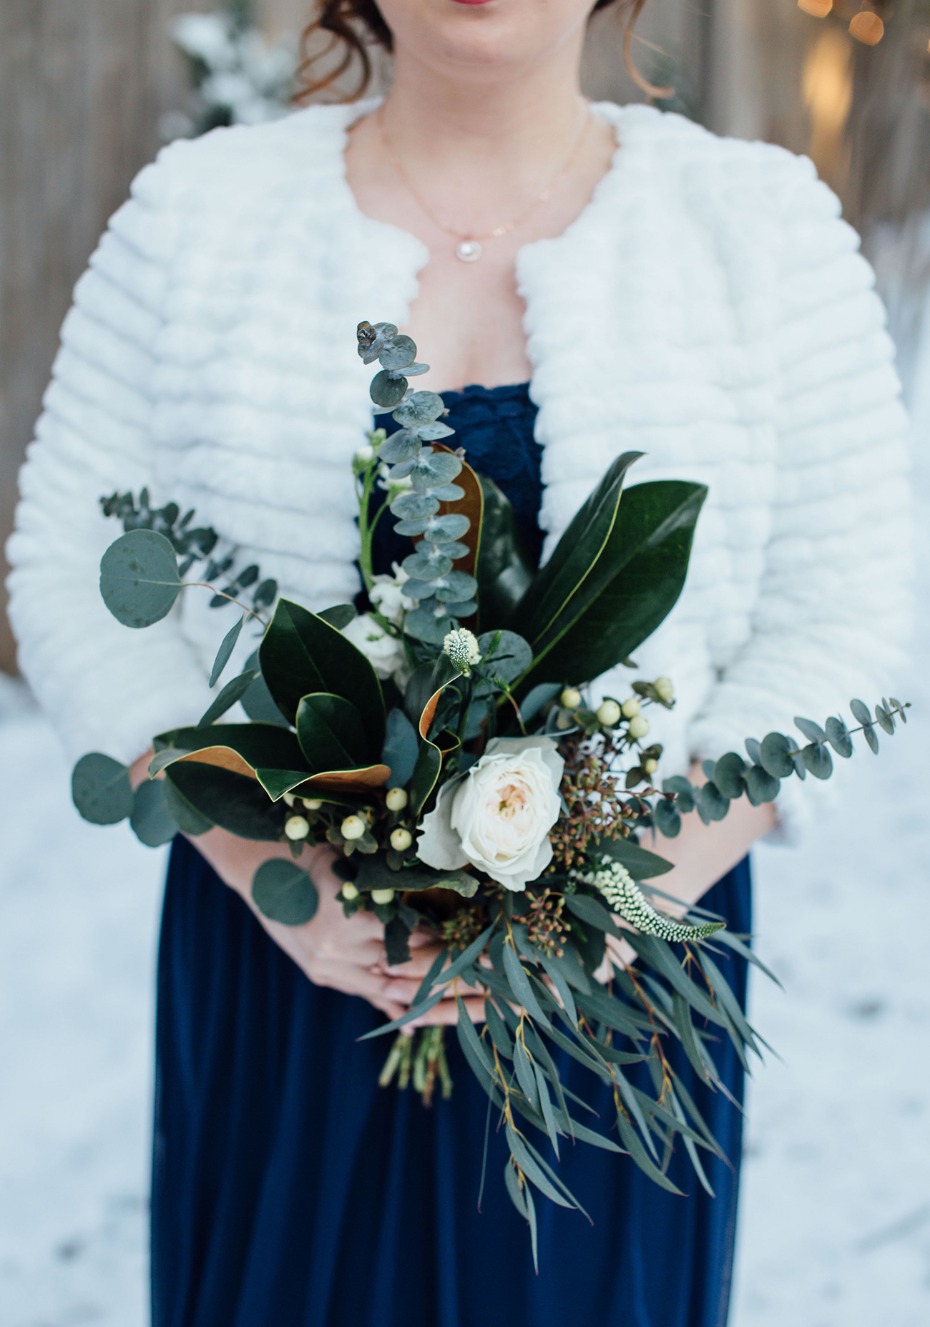 Bridesmaid bouquet for a winter wedding